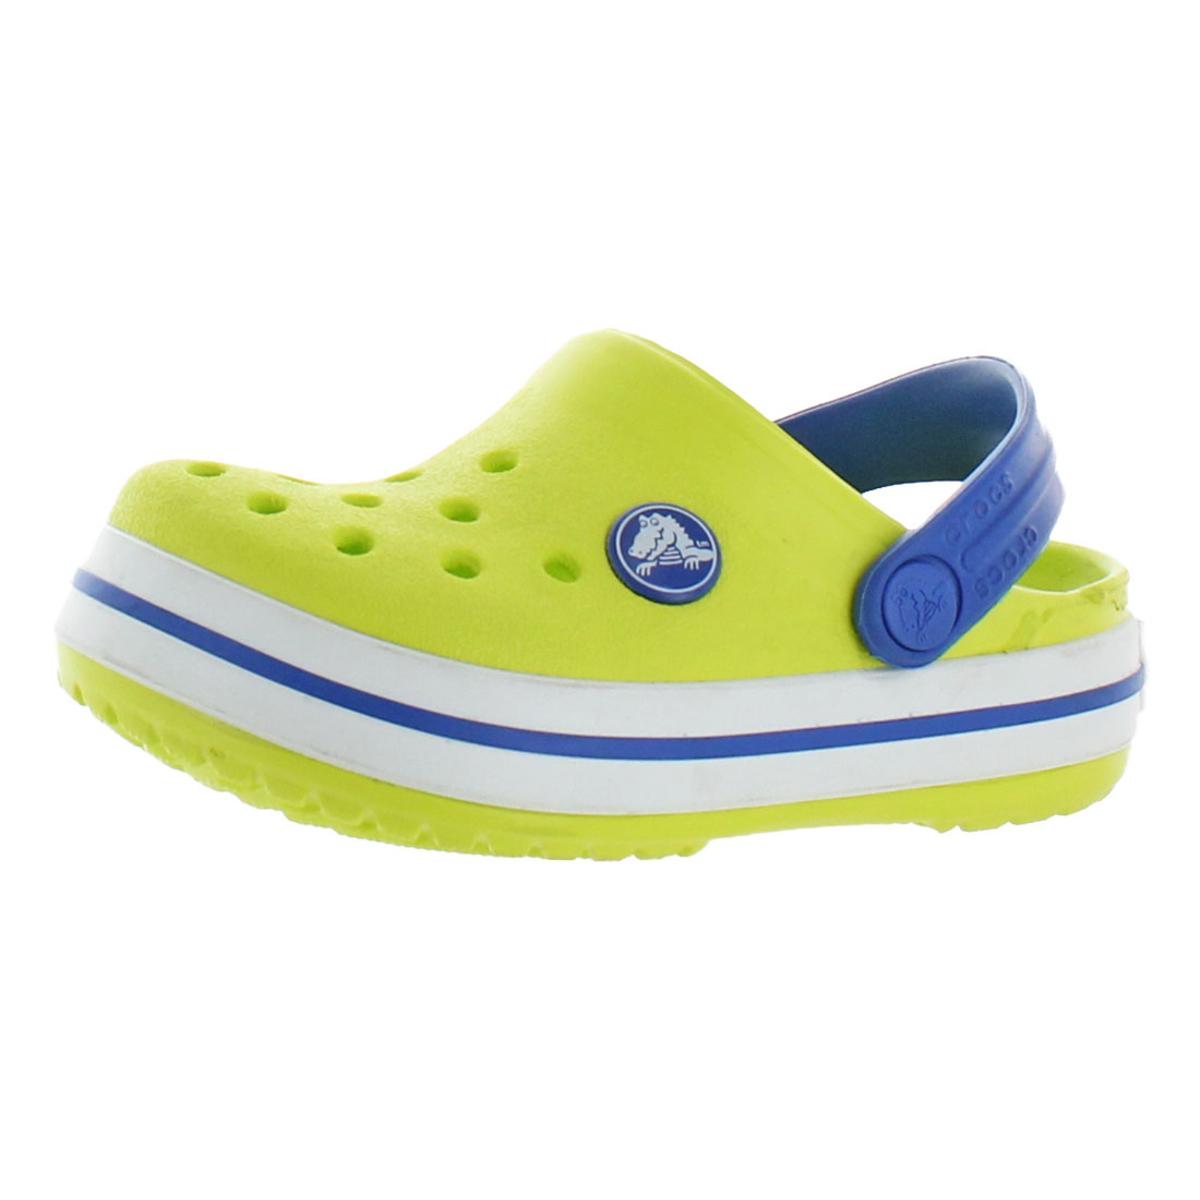 Crocs Unisex Kids Crocband Croslite Clog Shoes sold by BHFO | Rakuten ...